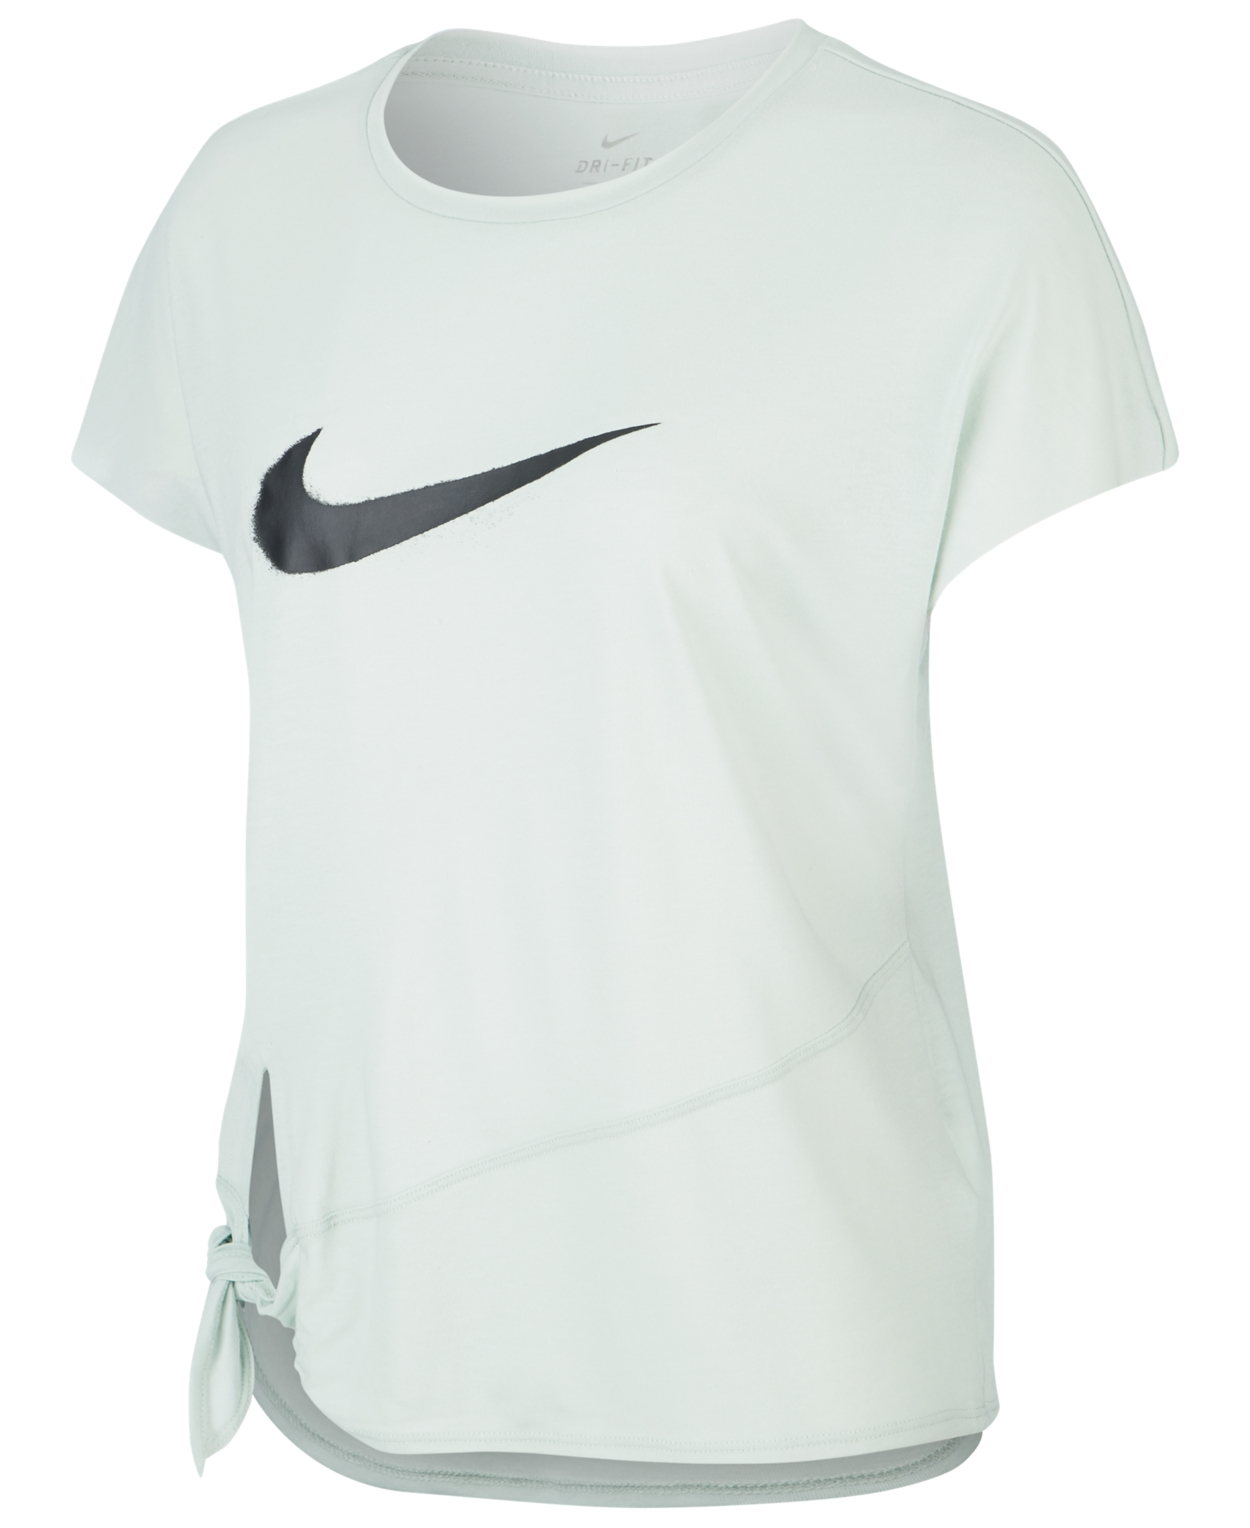 Nike Womens Dri Fit Logo Side Tie Training Top - image 1 of 1